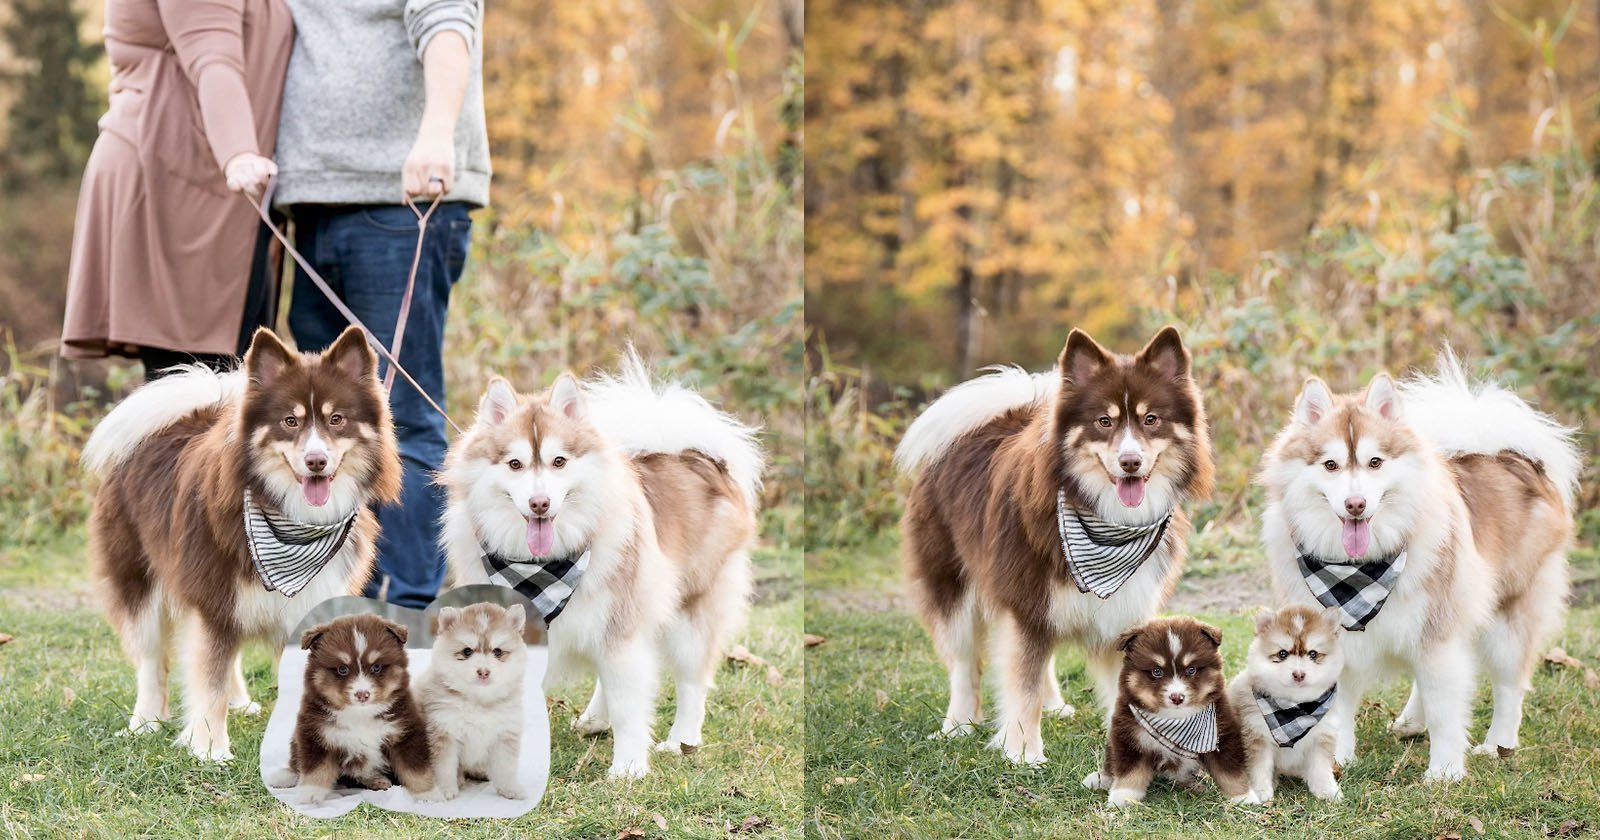 How a Photo Editor Made $100,000 Photoshopping Dog Pics